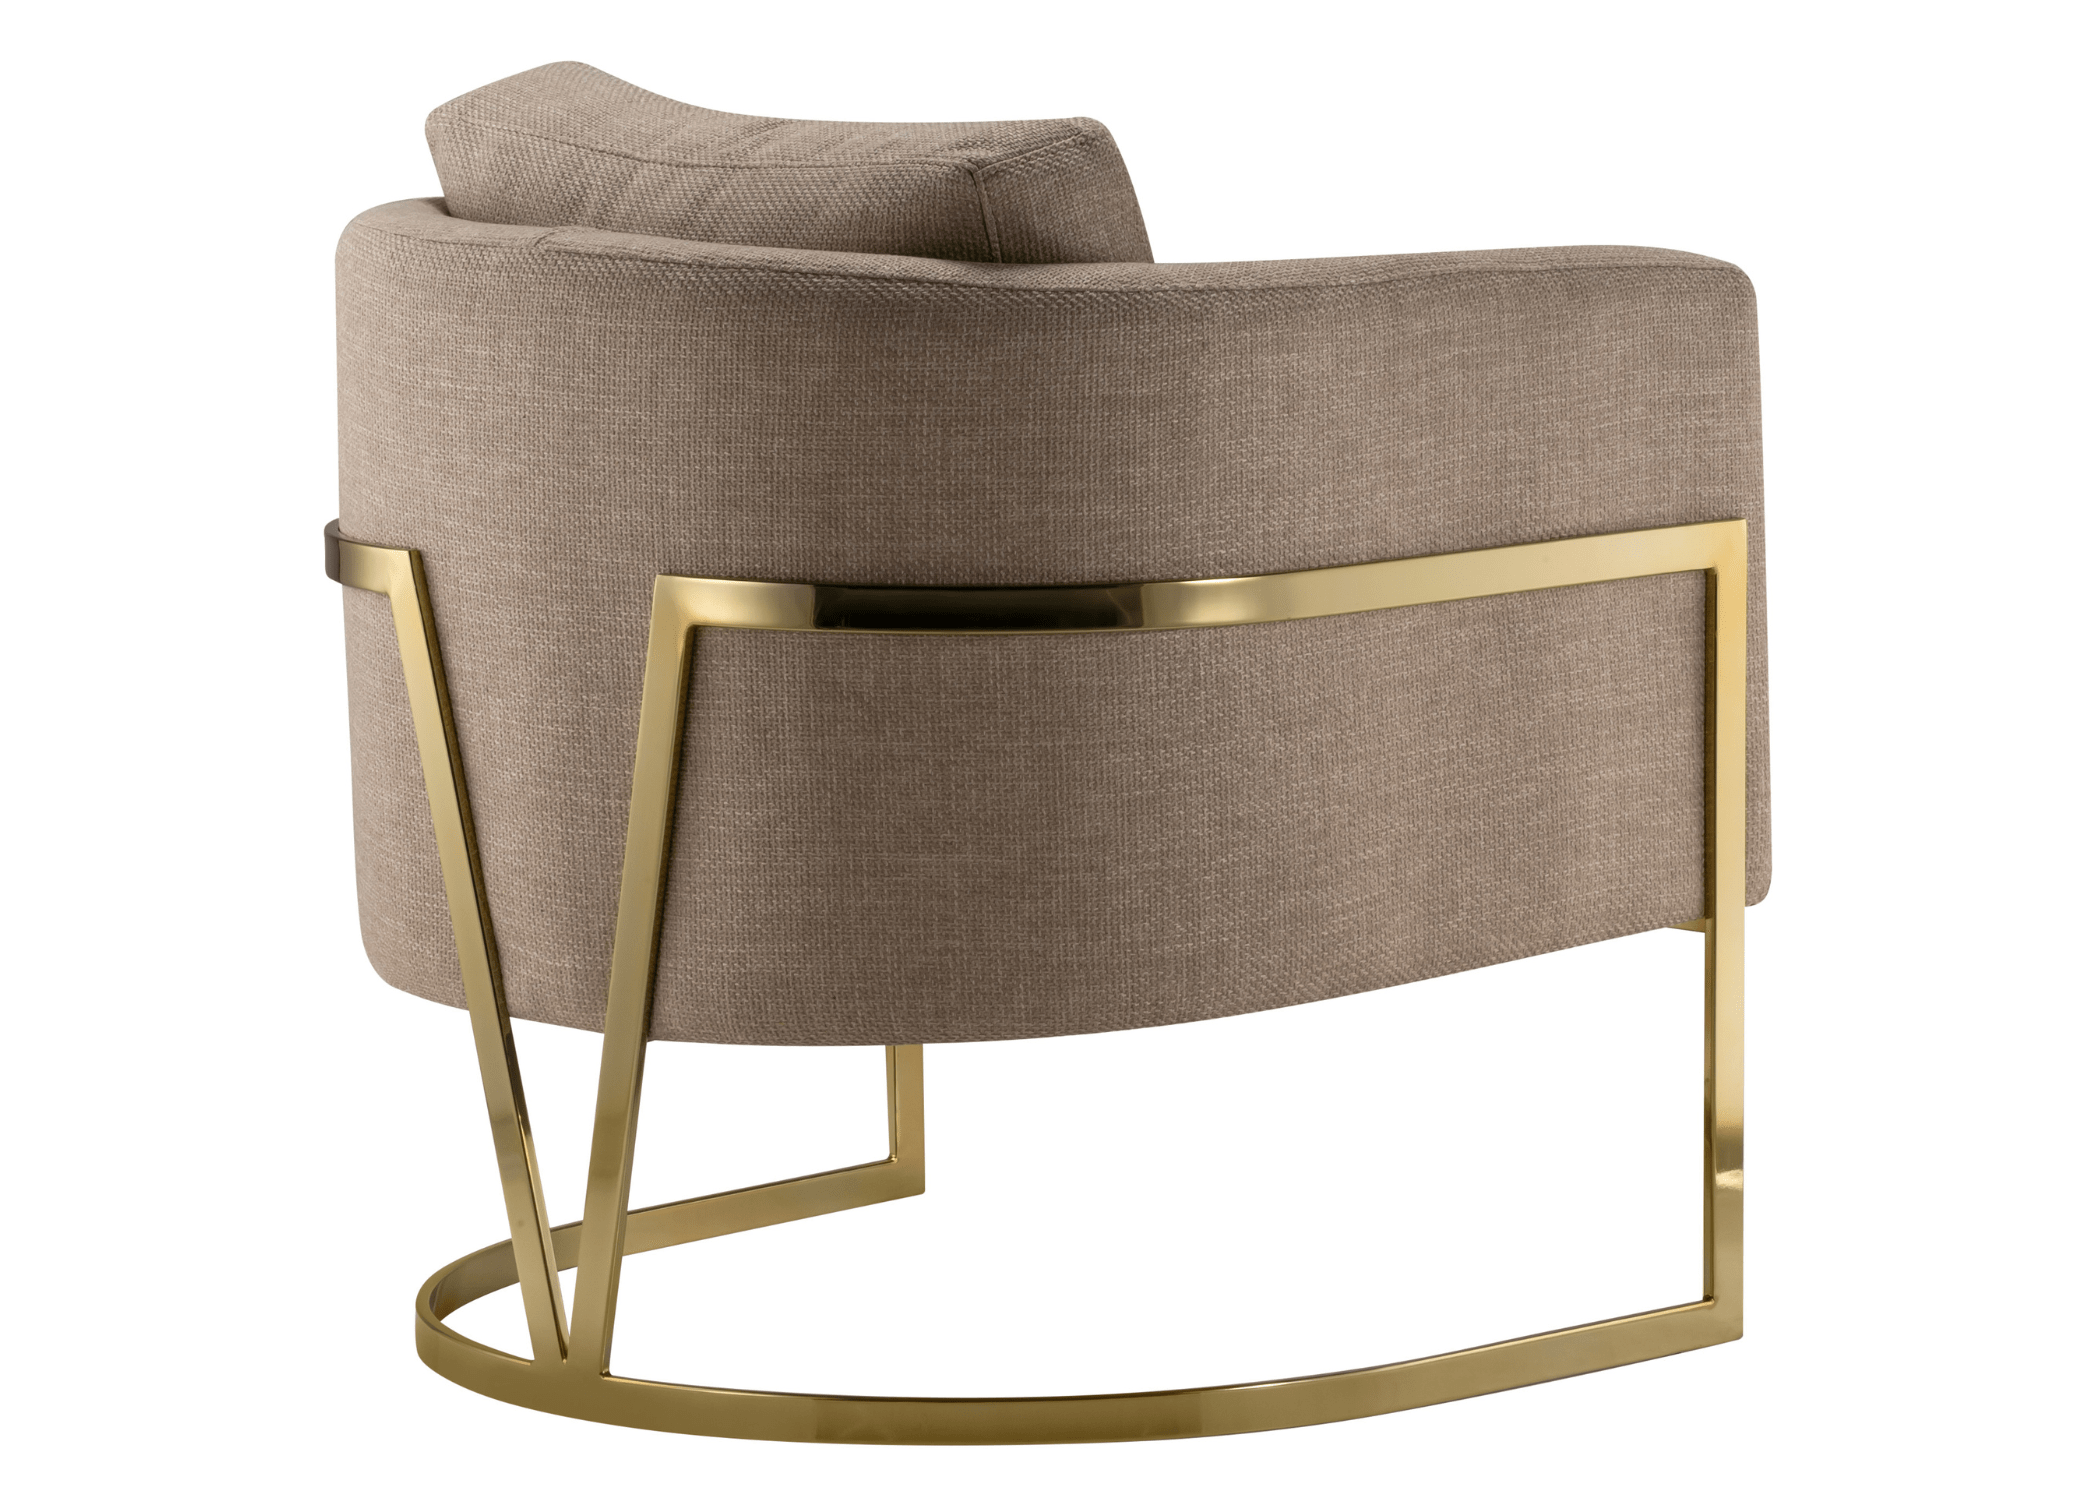 Conforto e elegância combinados na Poltrona Bastet, com assento e encosto macios e design refinado, perfeita para momentos de relaxamento e estilo.